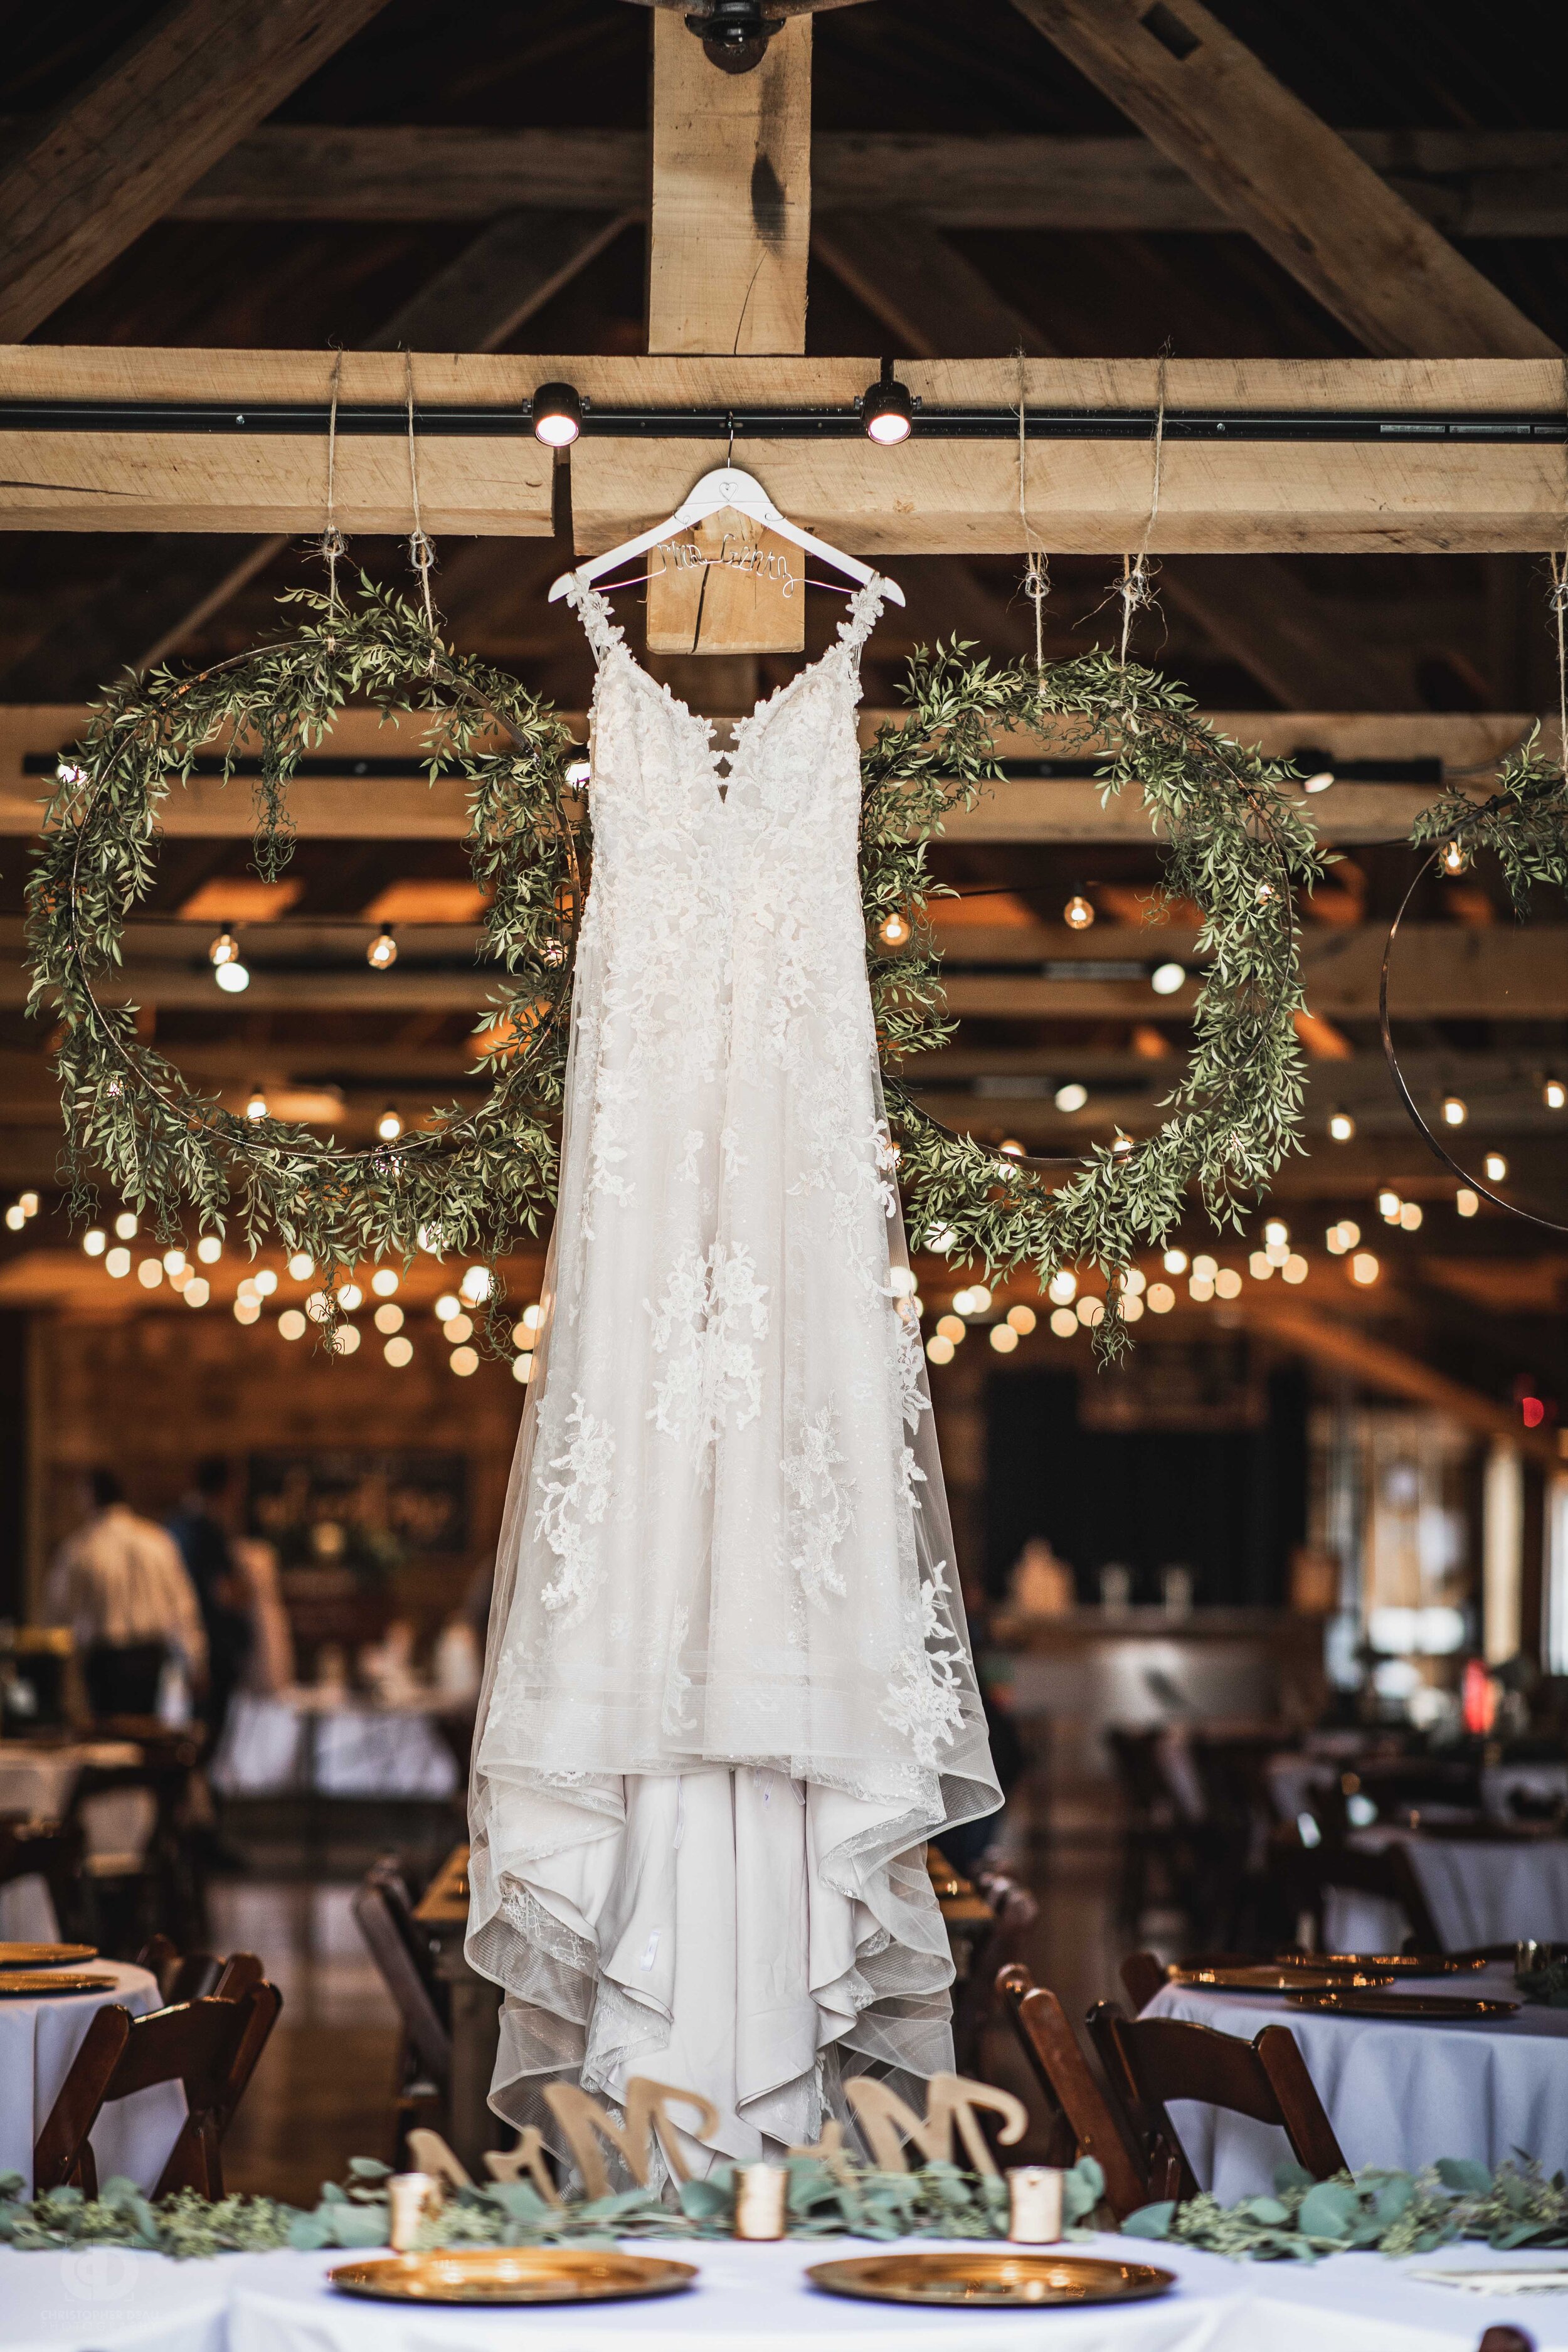  wedding dress hanging in a barn 